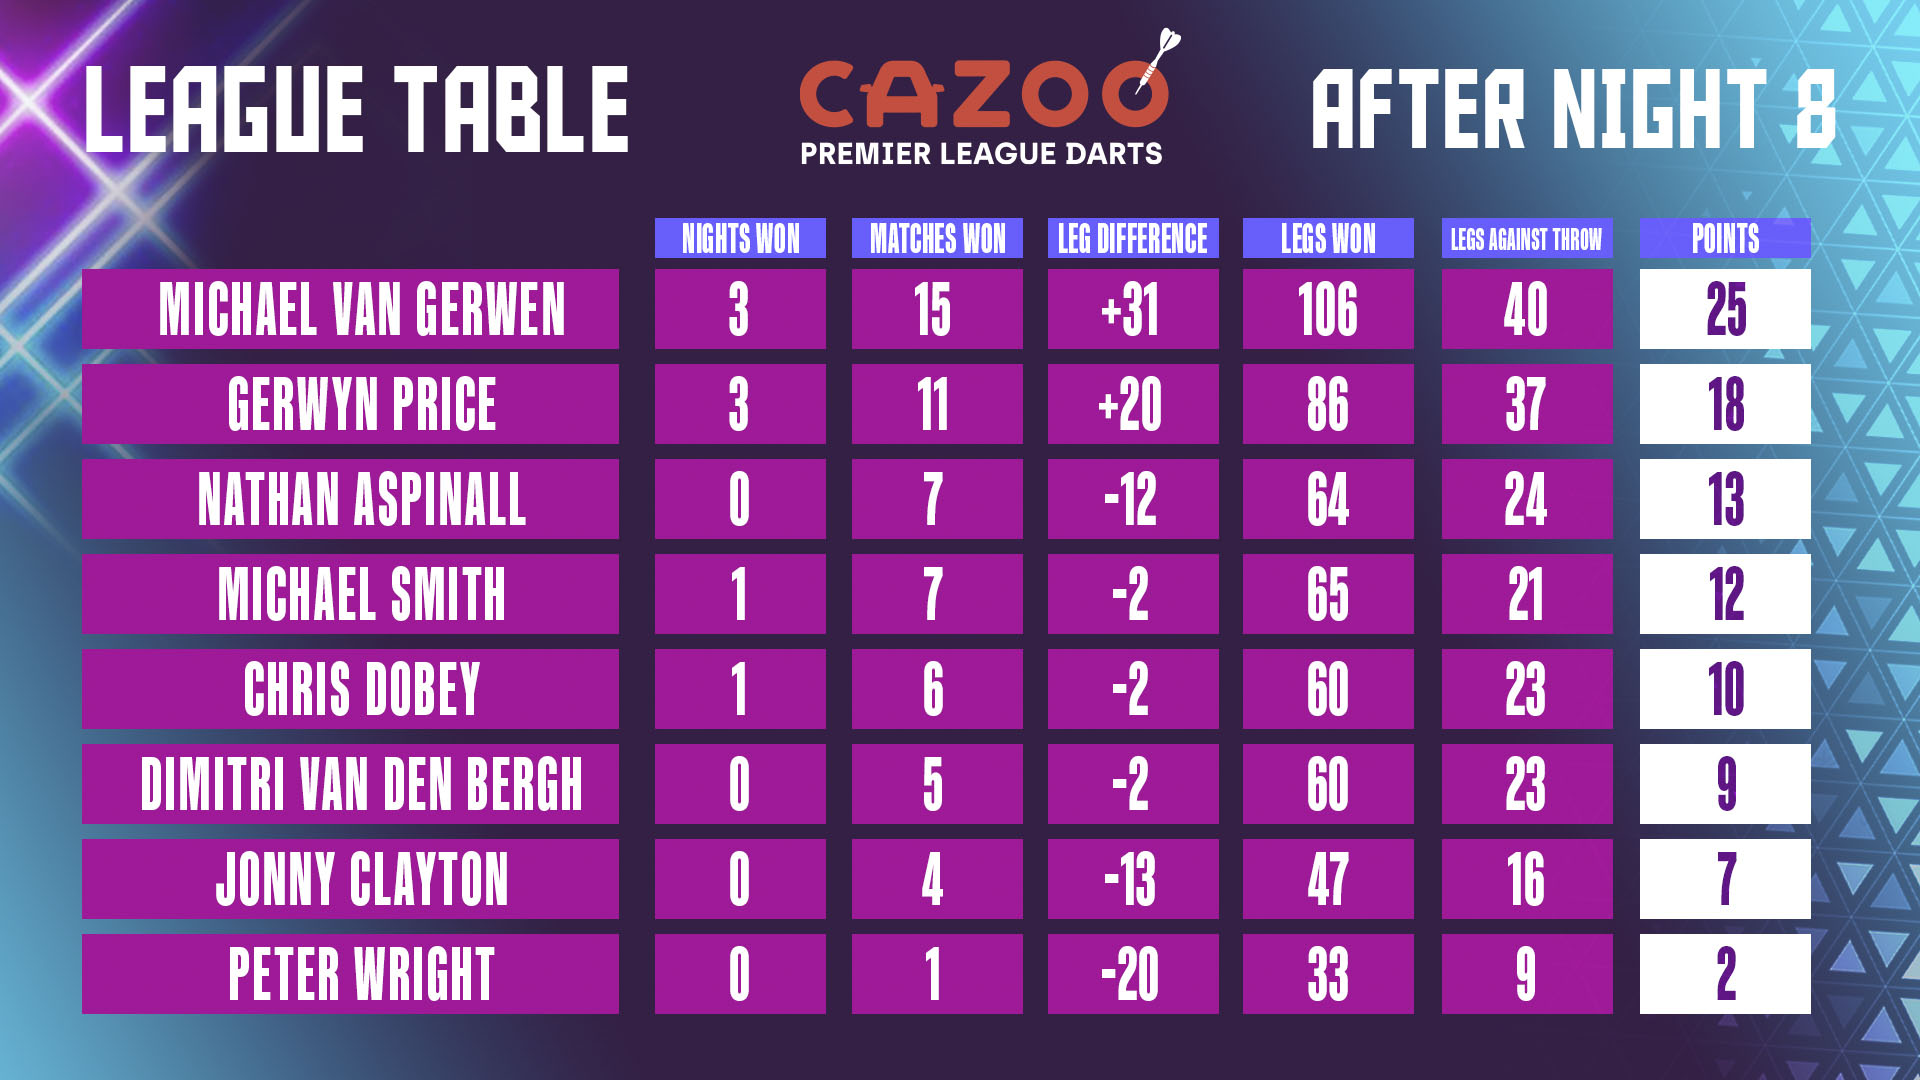 Cazoo Premier League Table